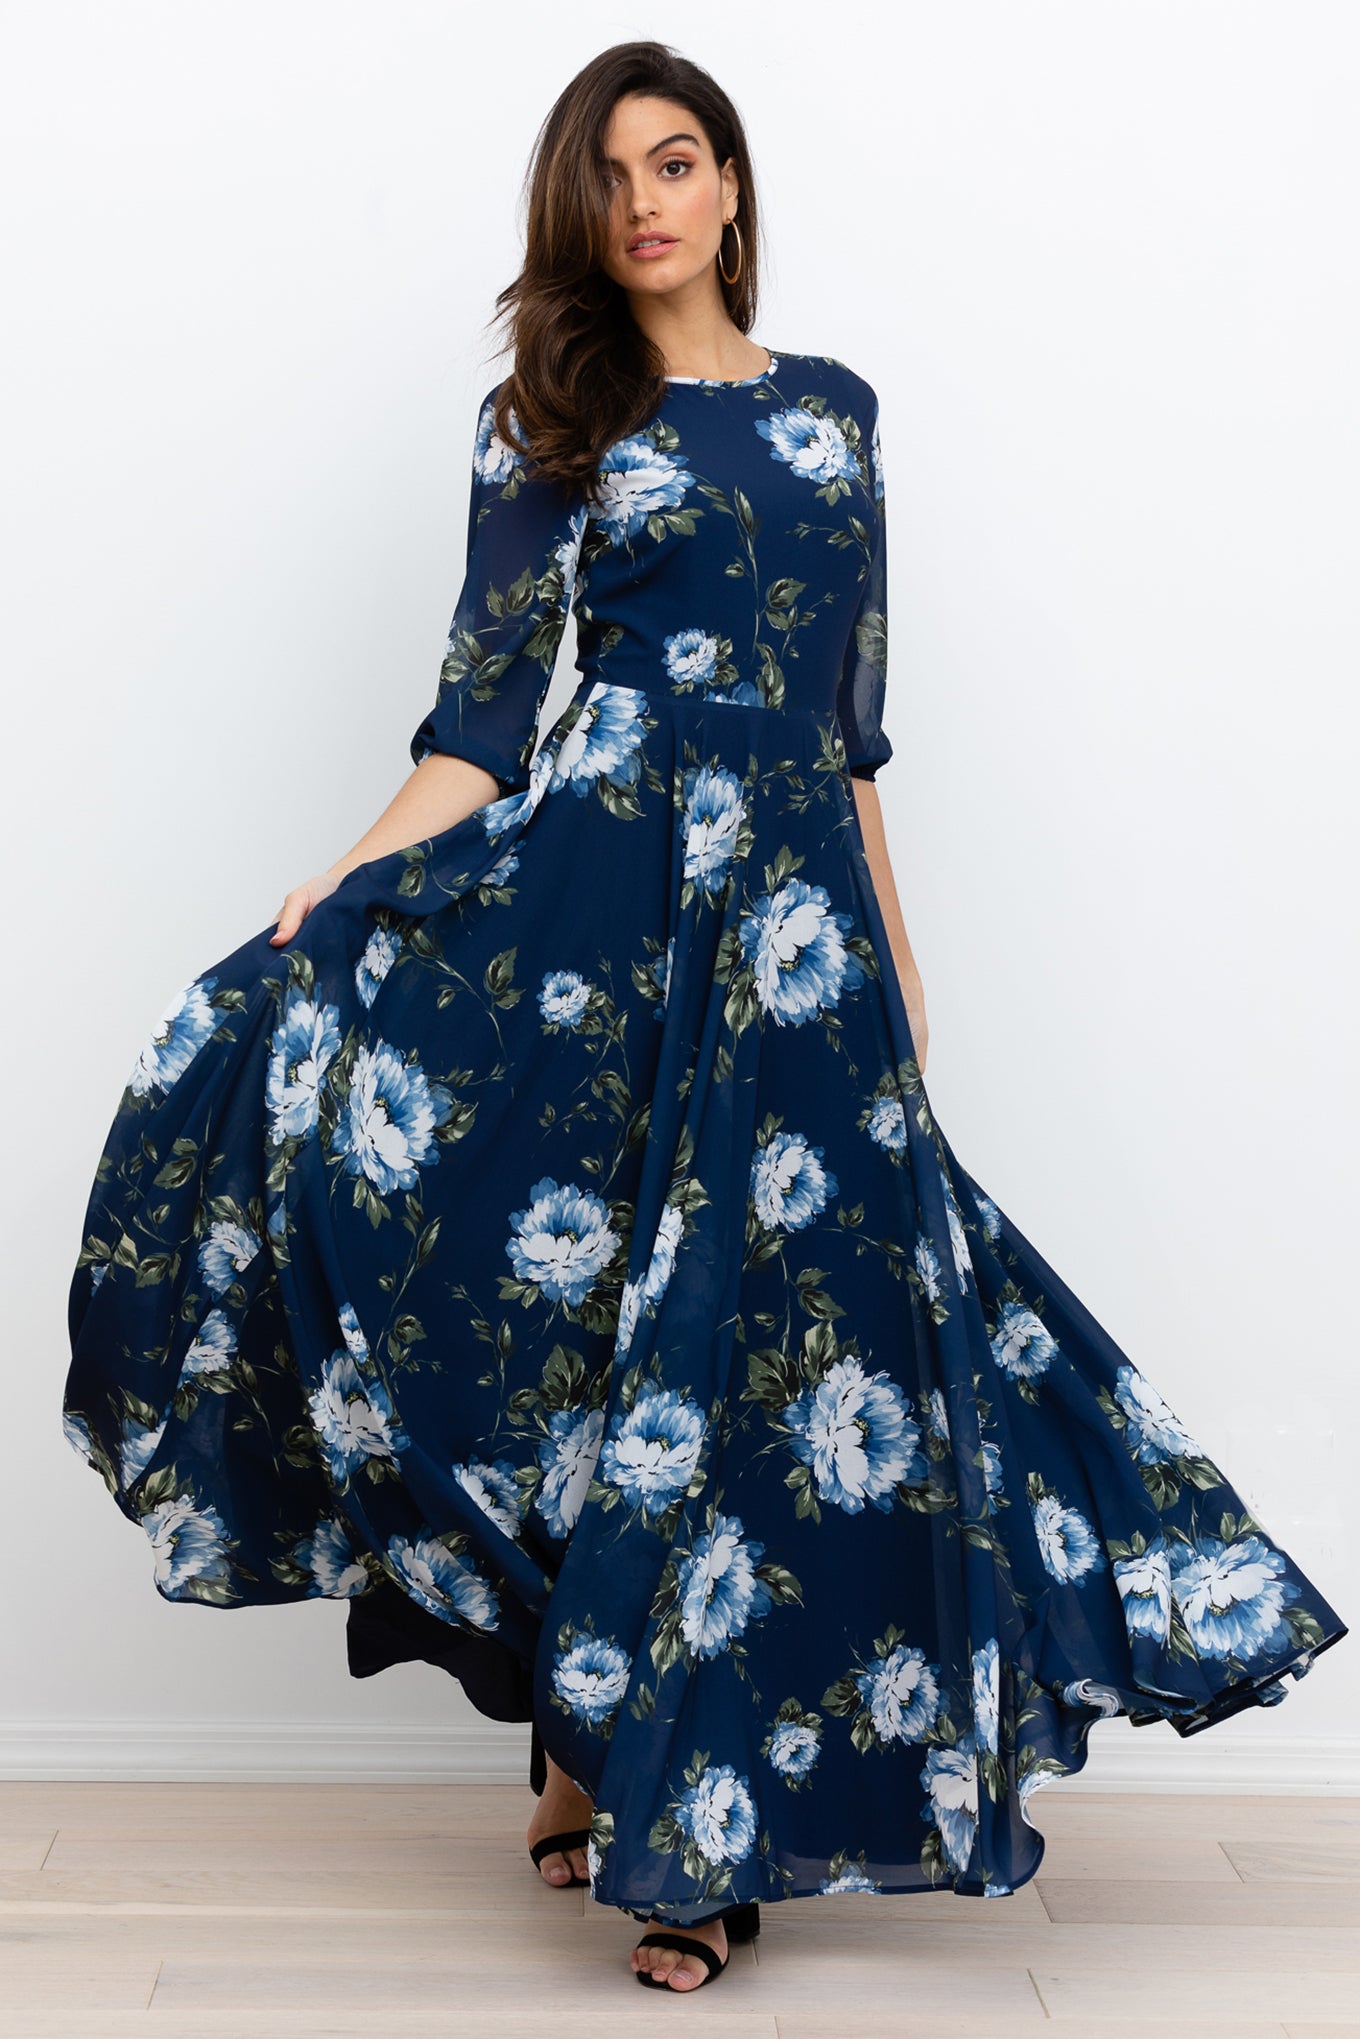 yumi kim woodstock maxi dress